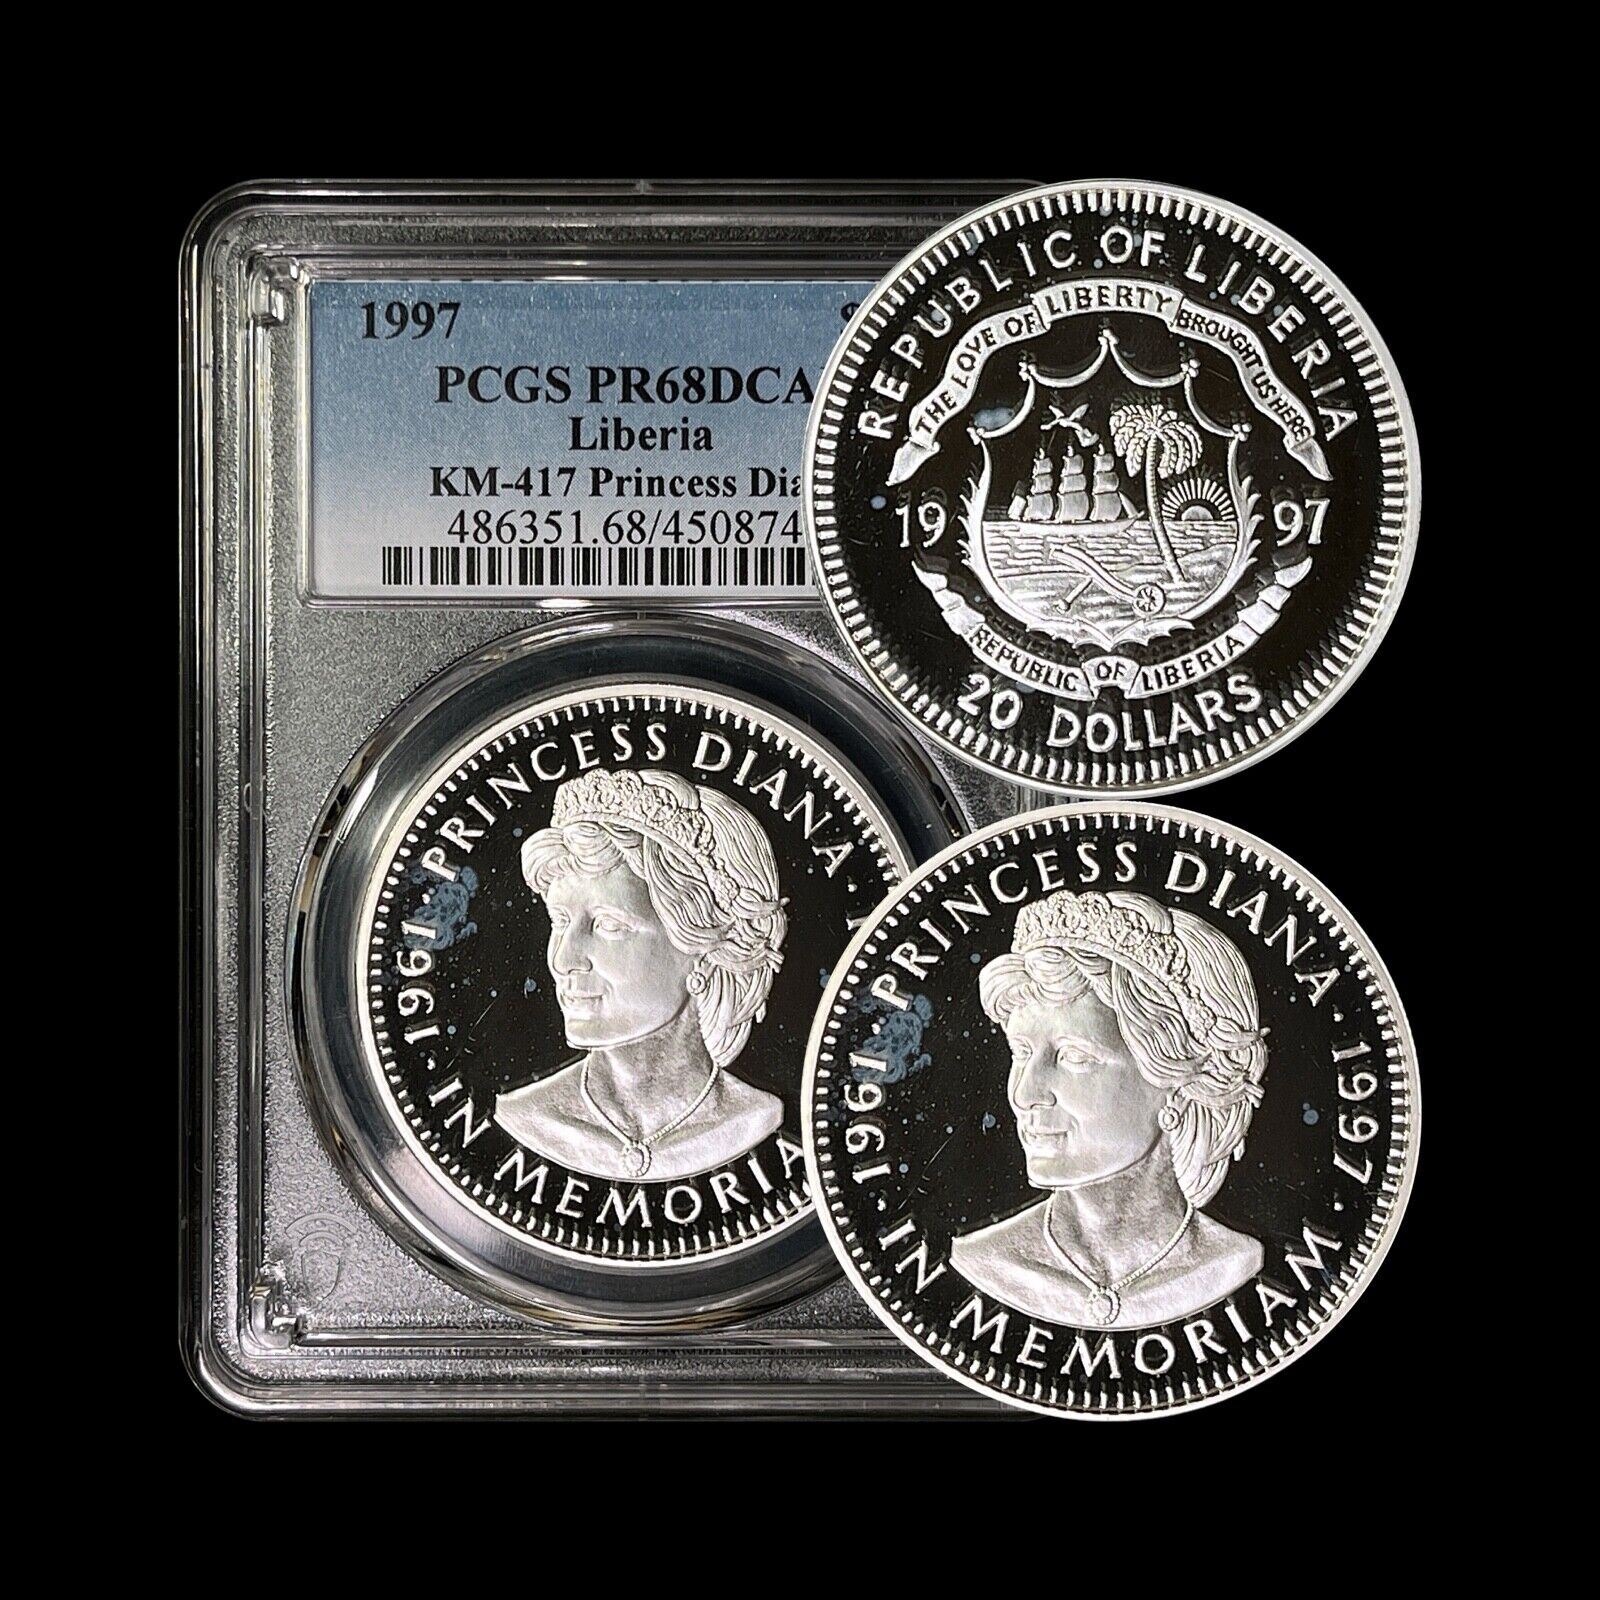 Liberia. 1997, 20 Dollars, Silver - Pcgs Pr68 - Top Pop 🥇 Princess Diana